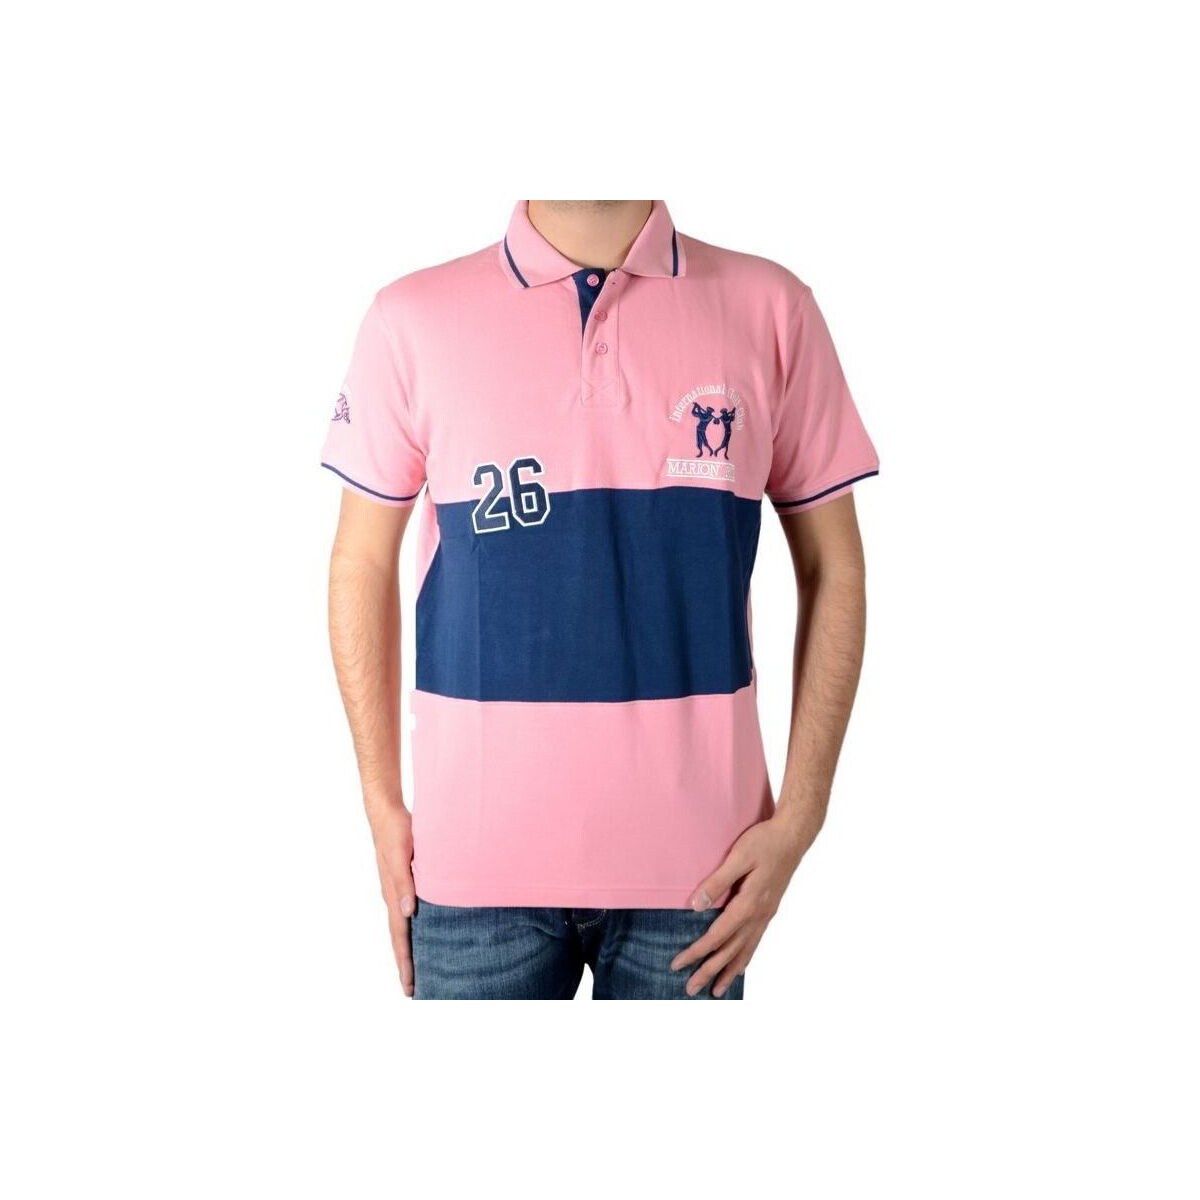 Îmbracaminte Bărbați Tricou Polo mânecă scurtă Marion Roth 55912 roz